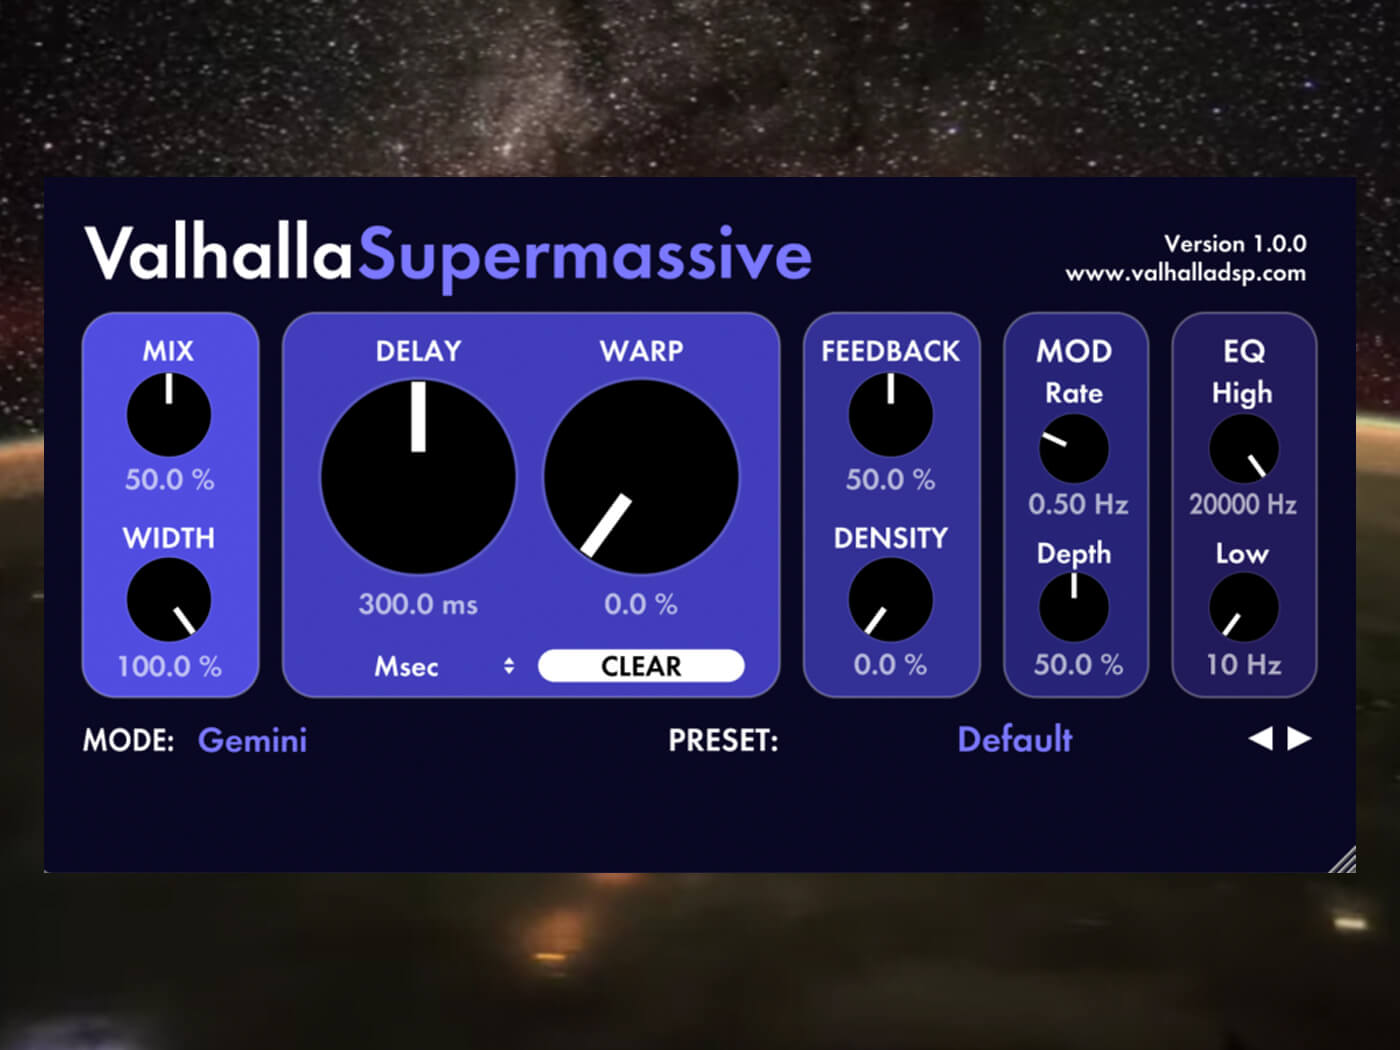 Valhalla Supermassive